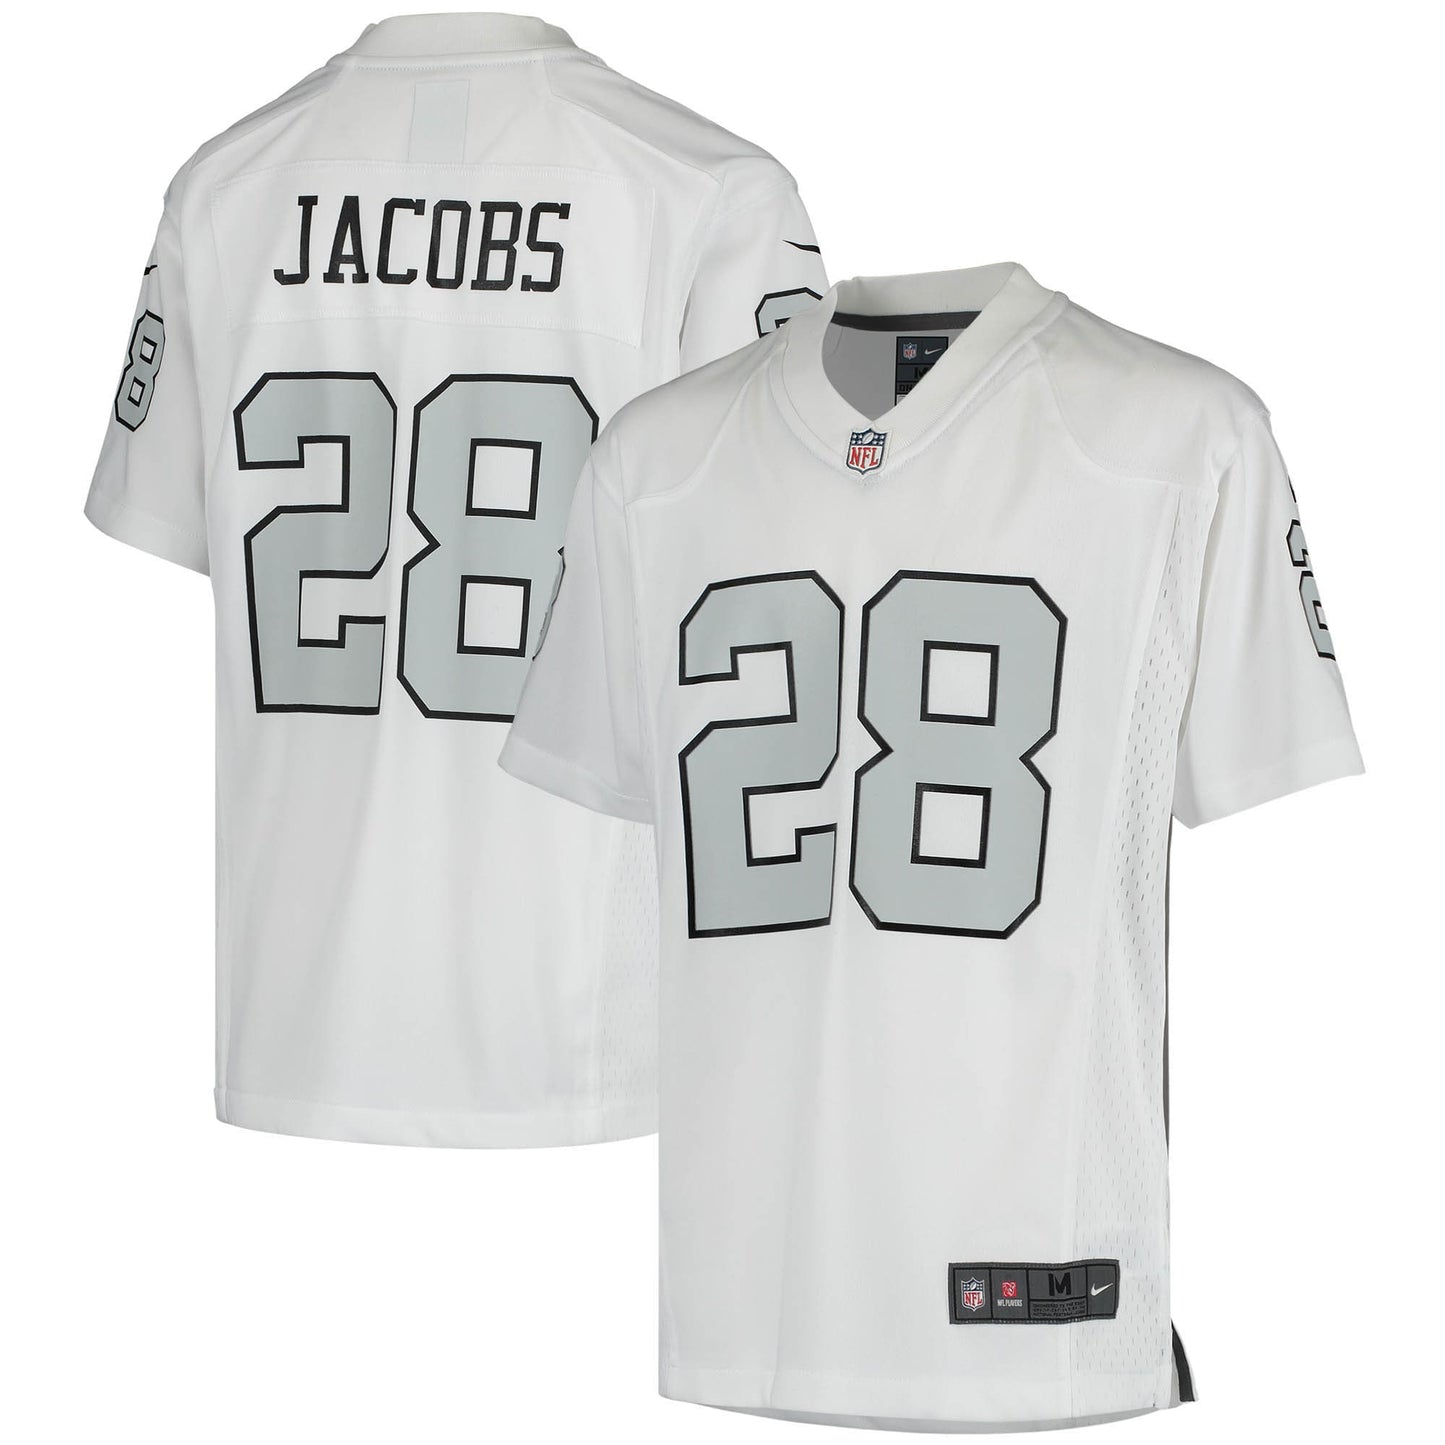 Josh Jacobs Las Vegas Raiders Nike Youth Color Rush Game Jersey - White